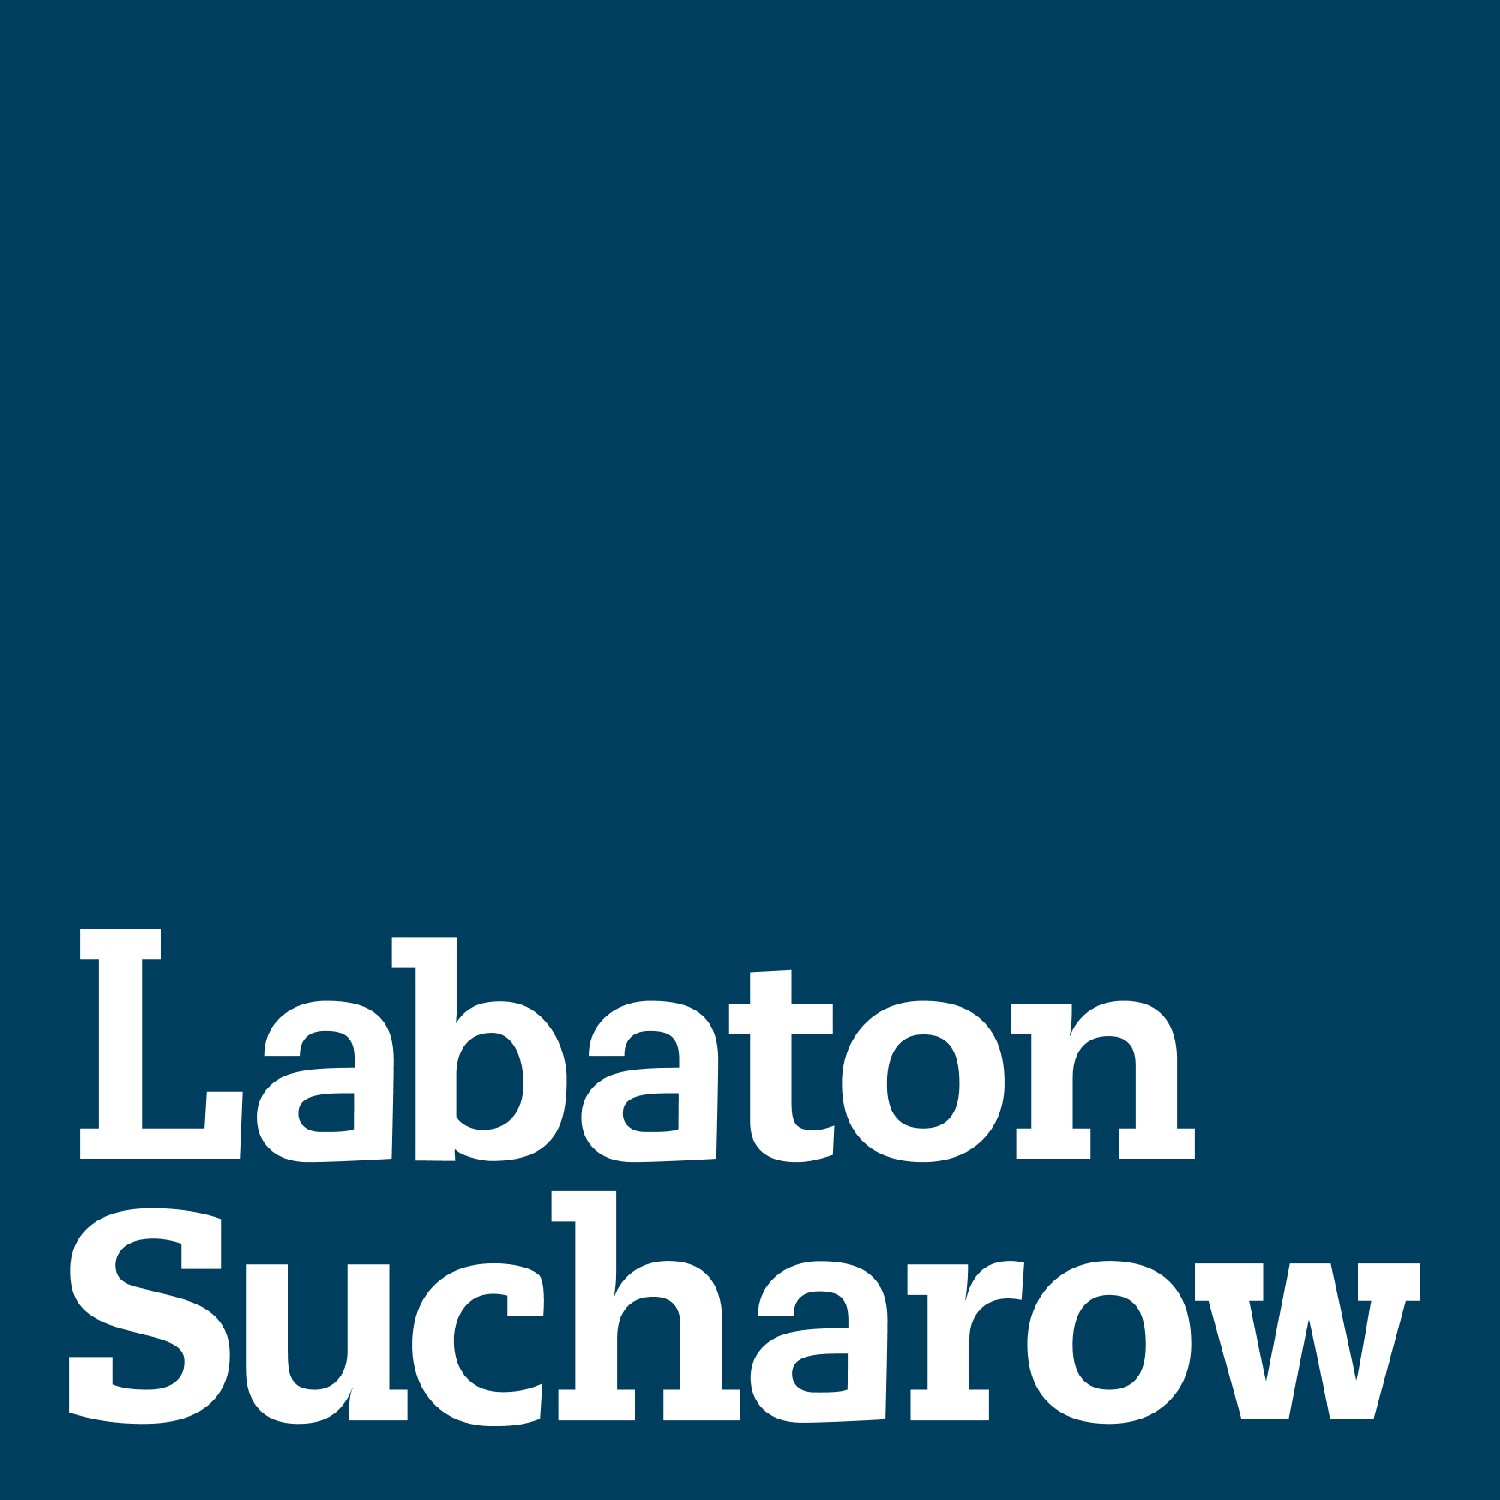 Labaton Sucharow LLP, Wednesday, April 29, 2020, Press release picture